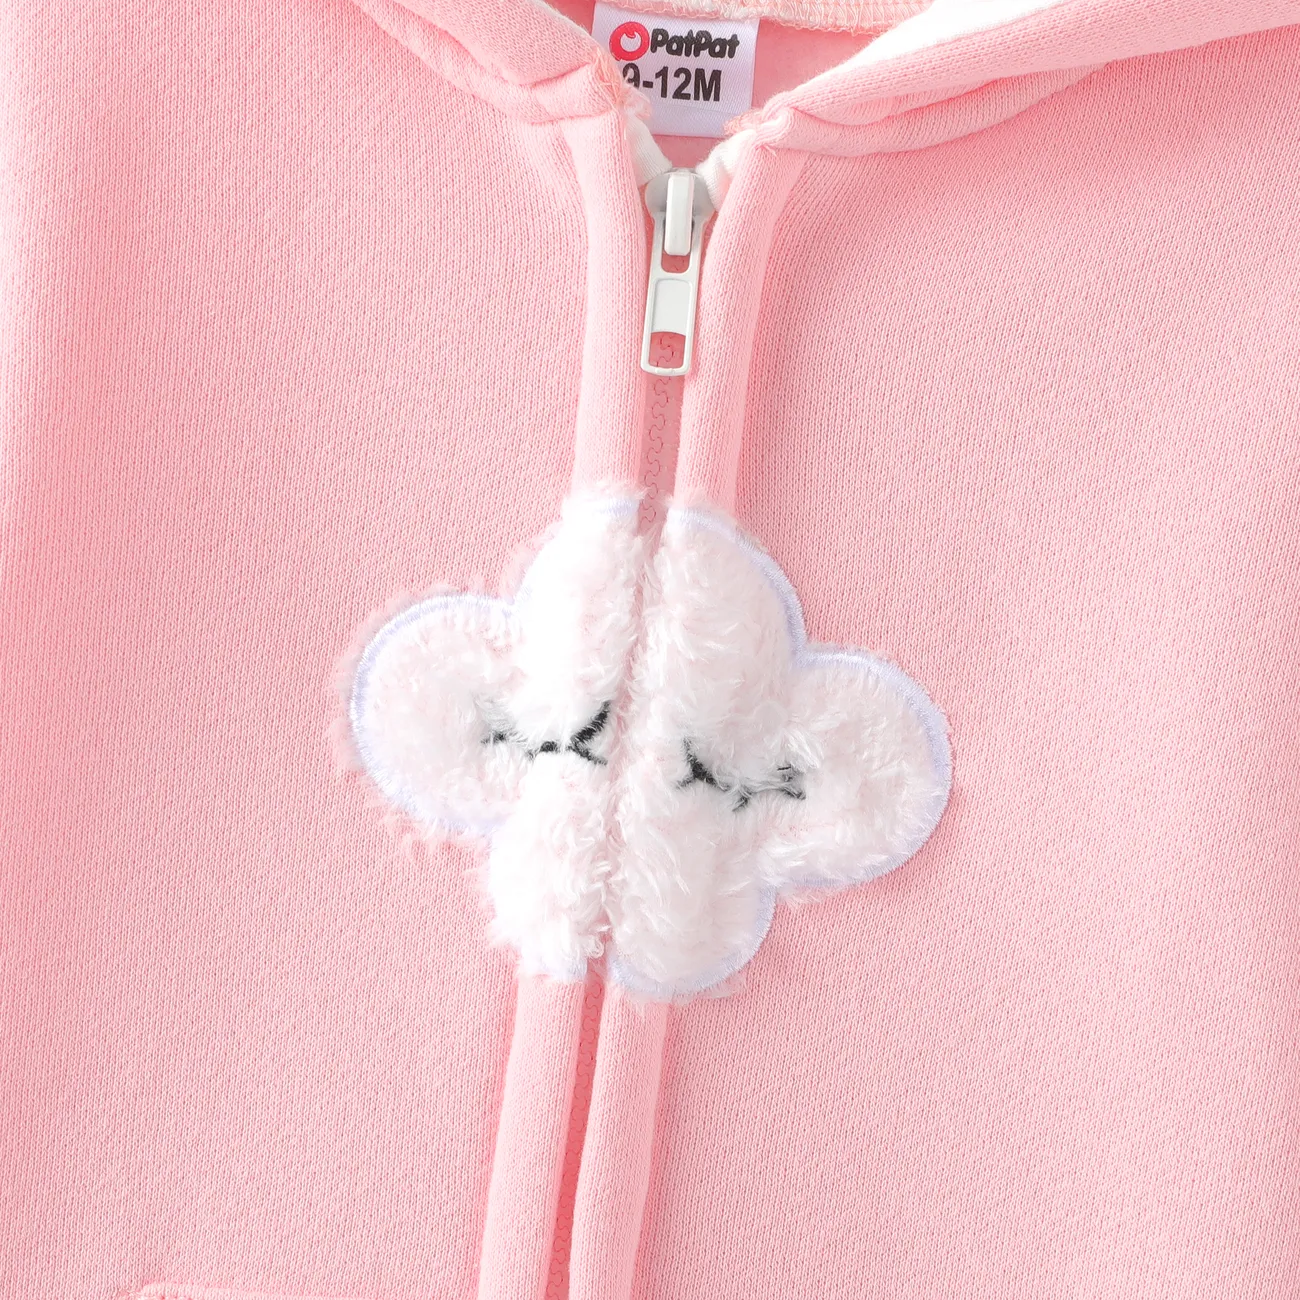 Baby Boy/Girl Cloud Design Thermal Fleece Lined Hooded Zipper Jumpsuit Pink big image 1